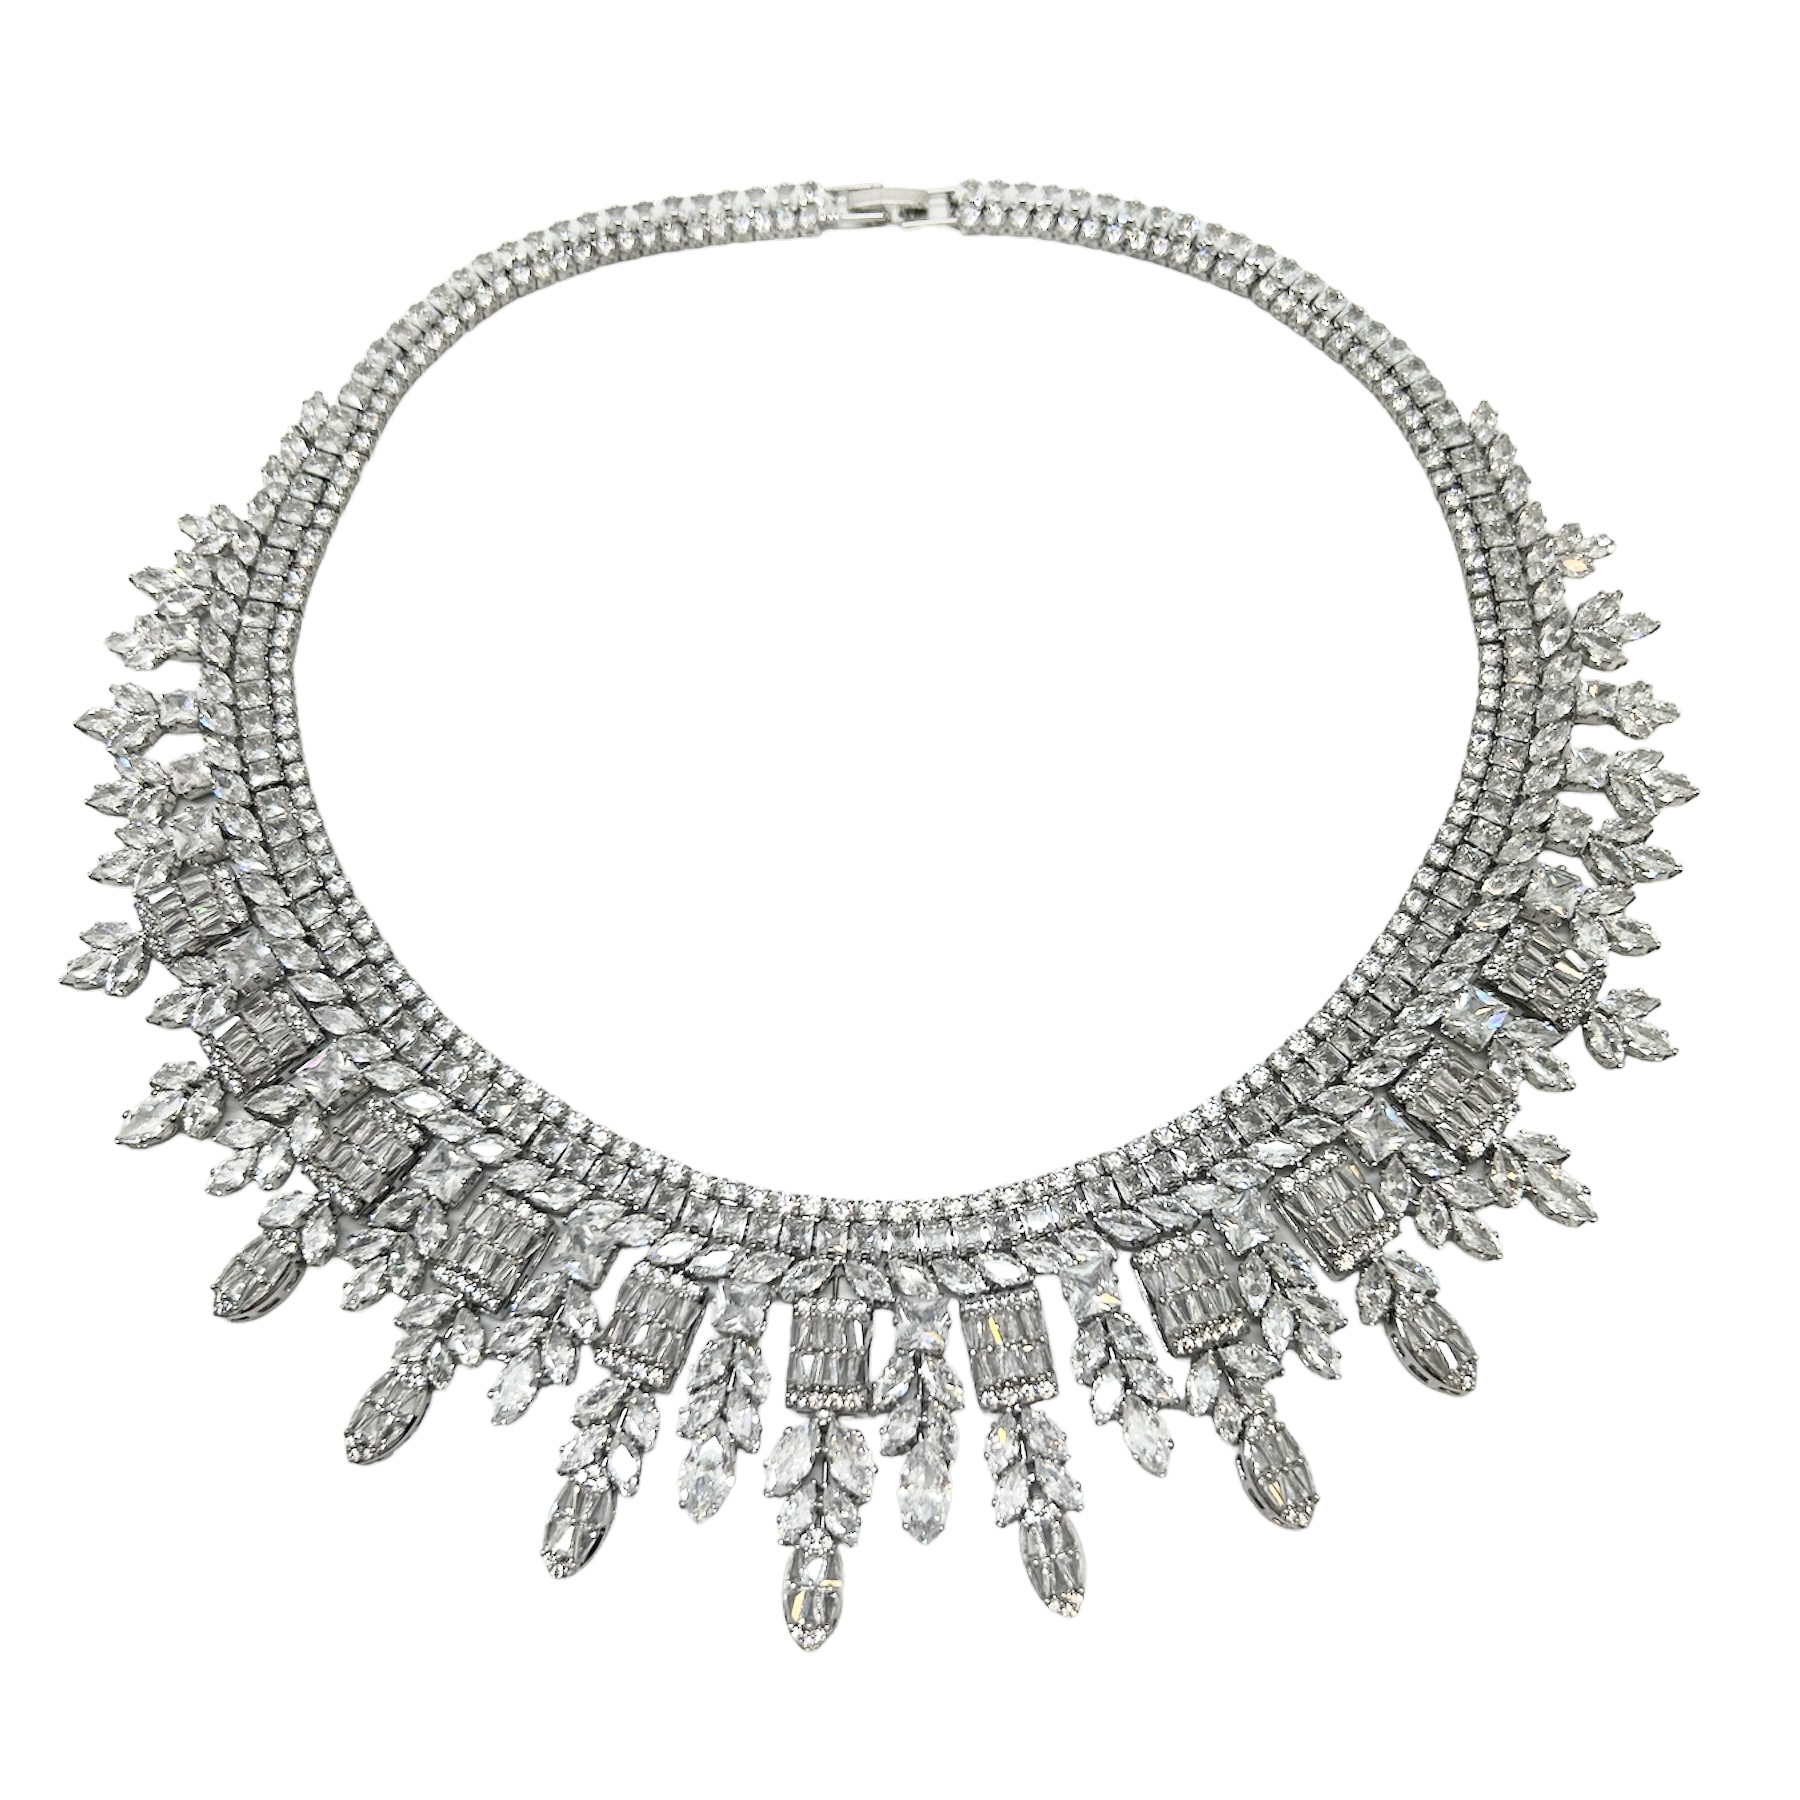 Statement crystal bridal necklace - Vivia | Jeanette Maree